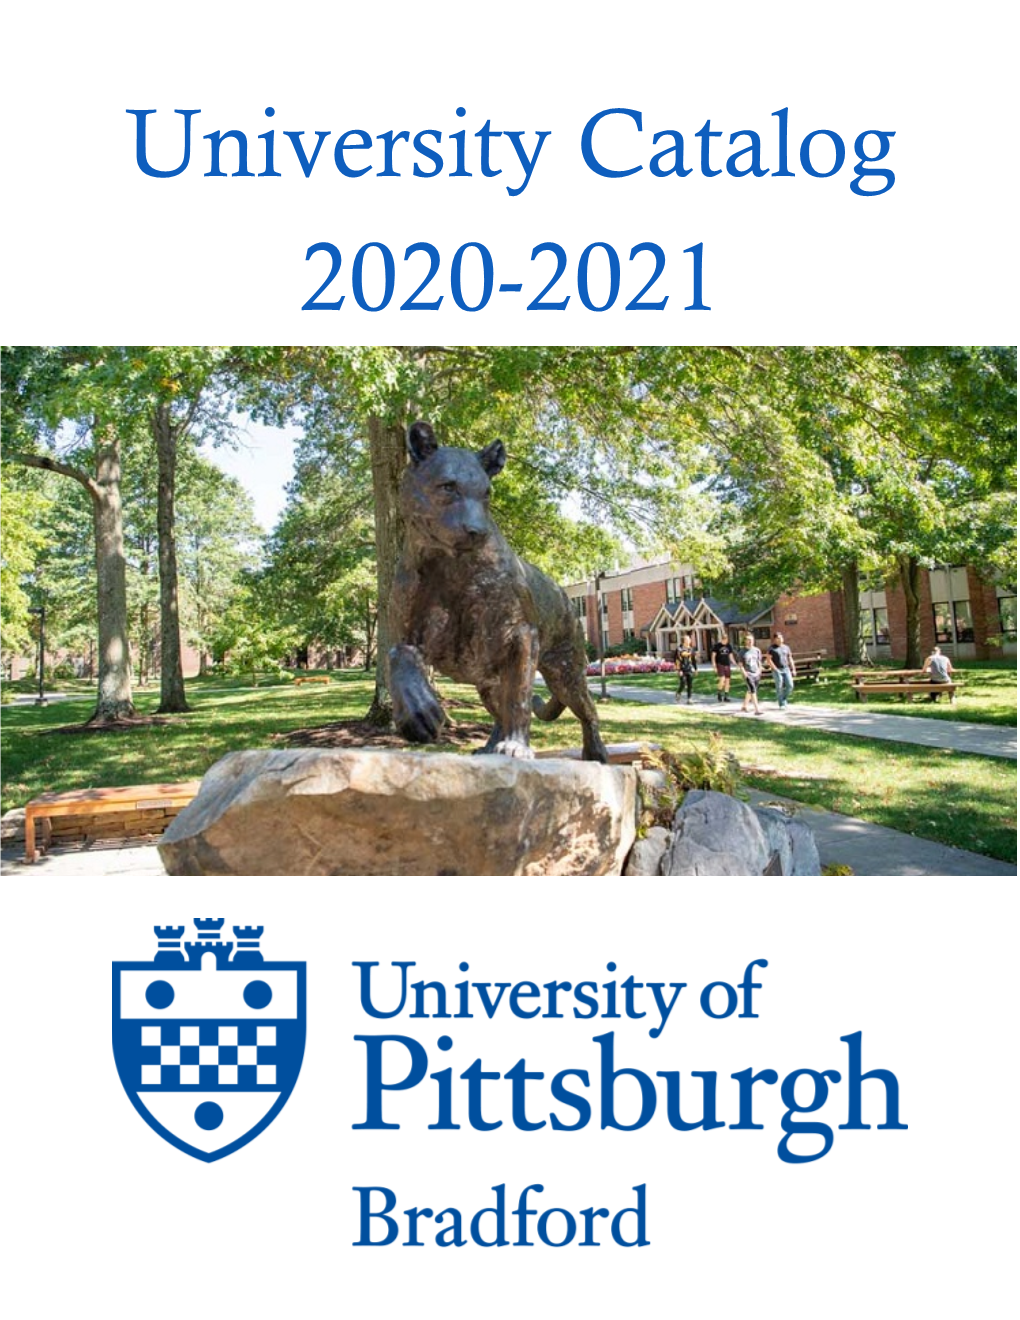 University Catalog 2020-2021 Academic Calendar - Calendar 11/2/20, 9:28 AM